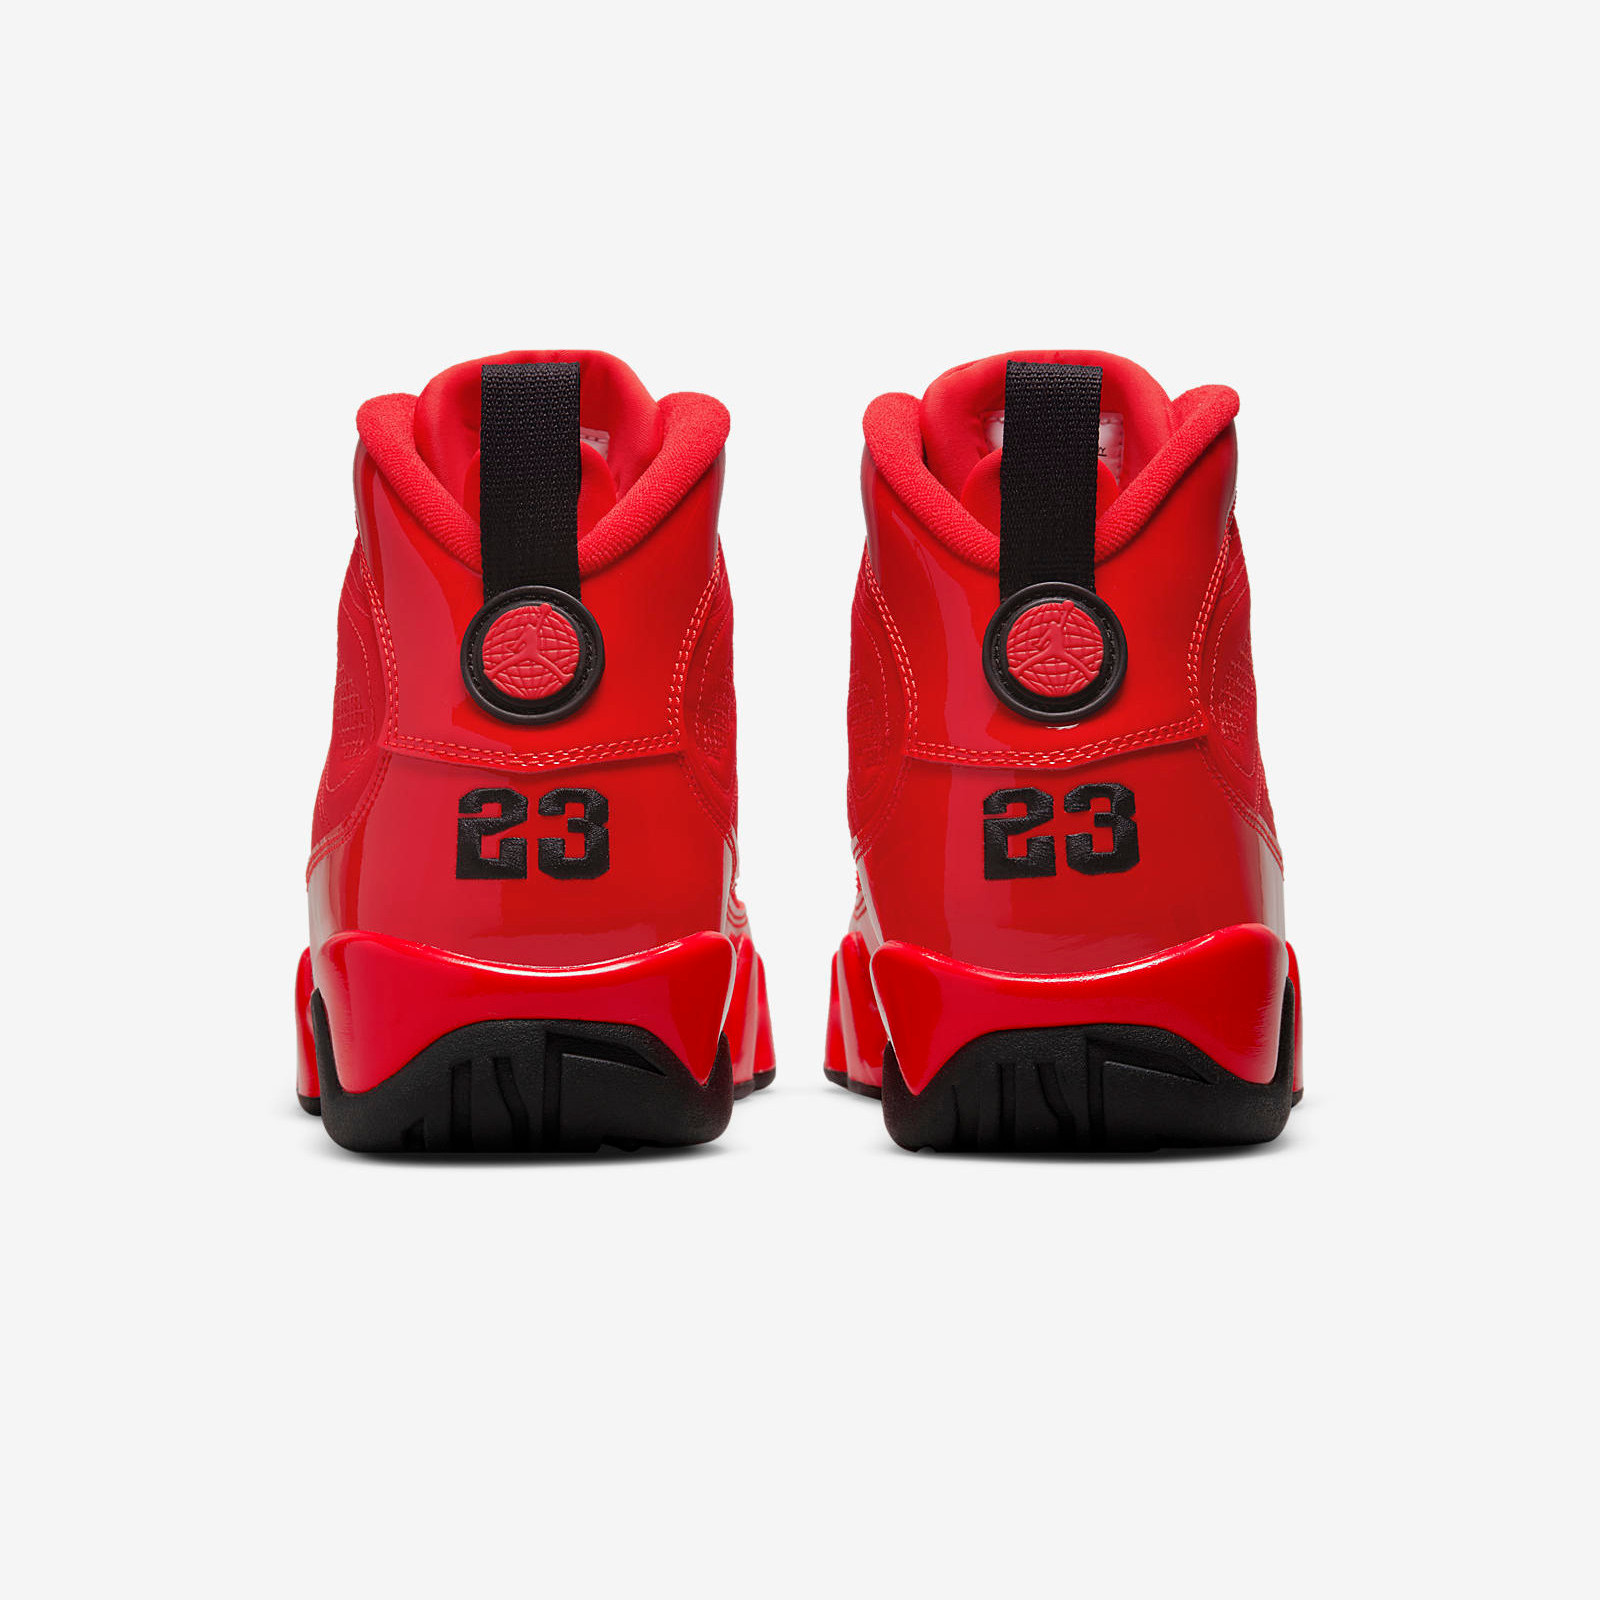 Air Jordan 9 Retro
« Chile Red »